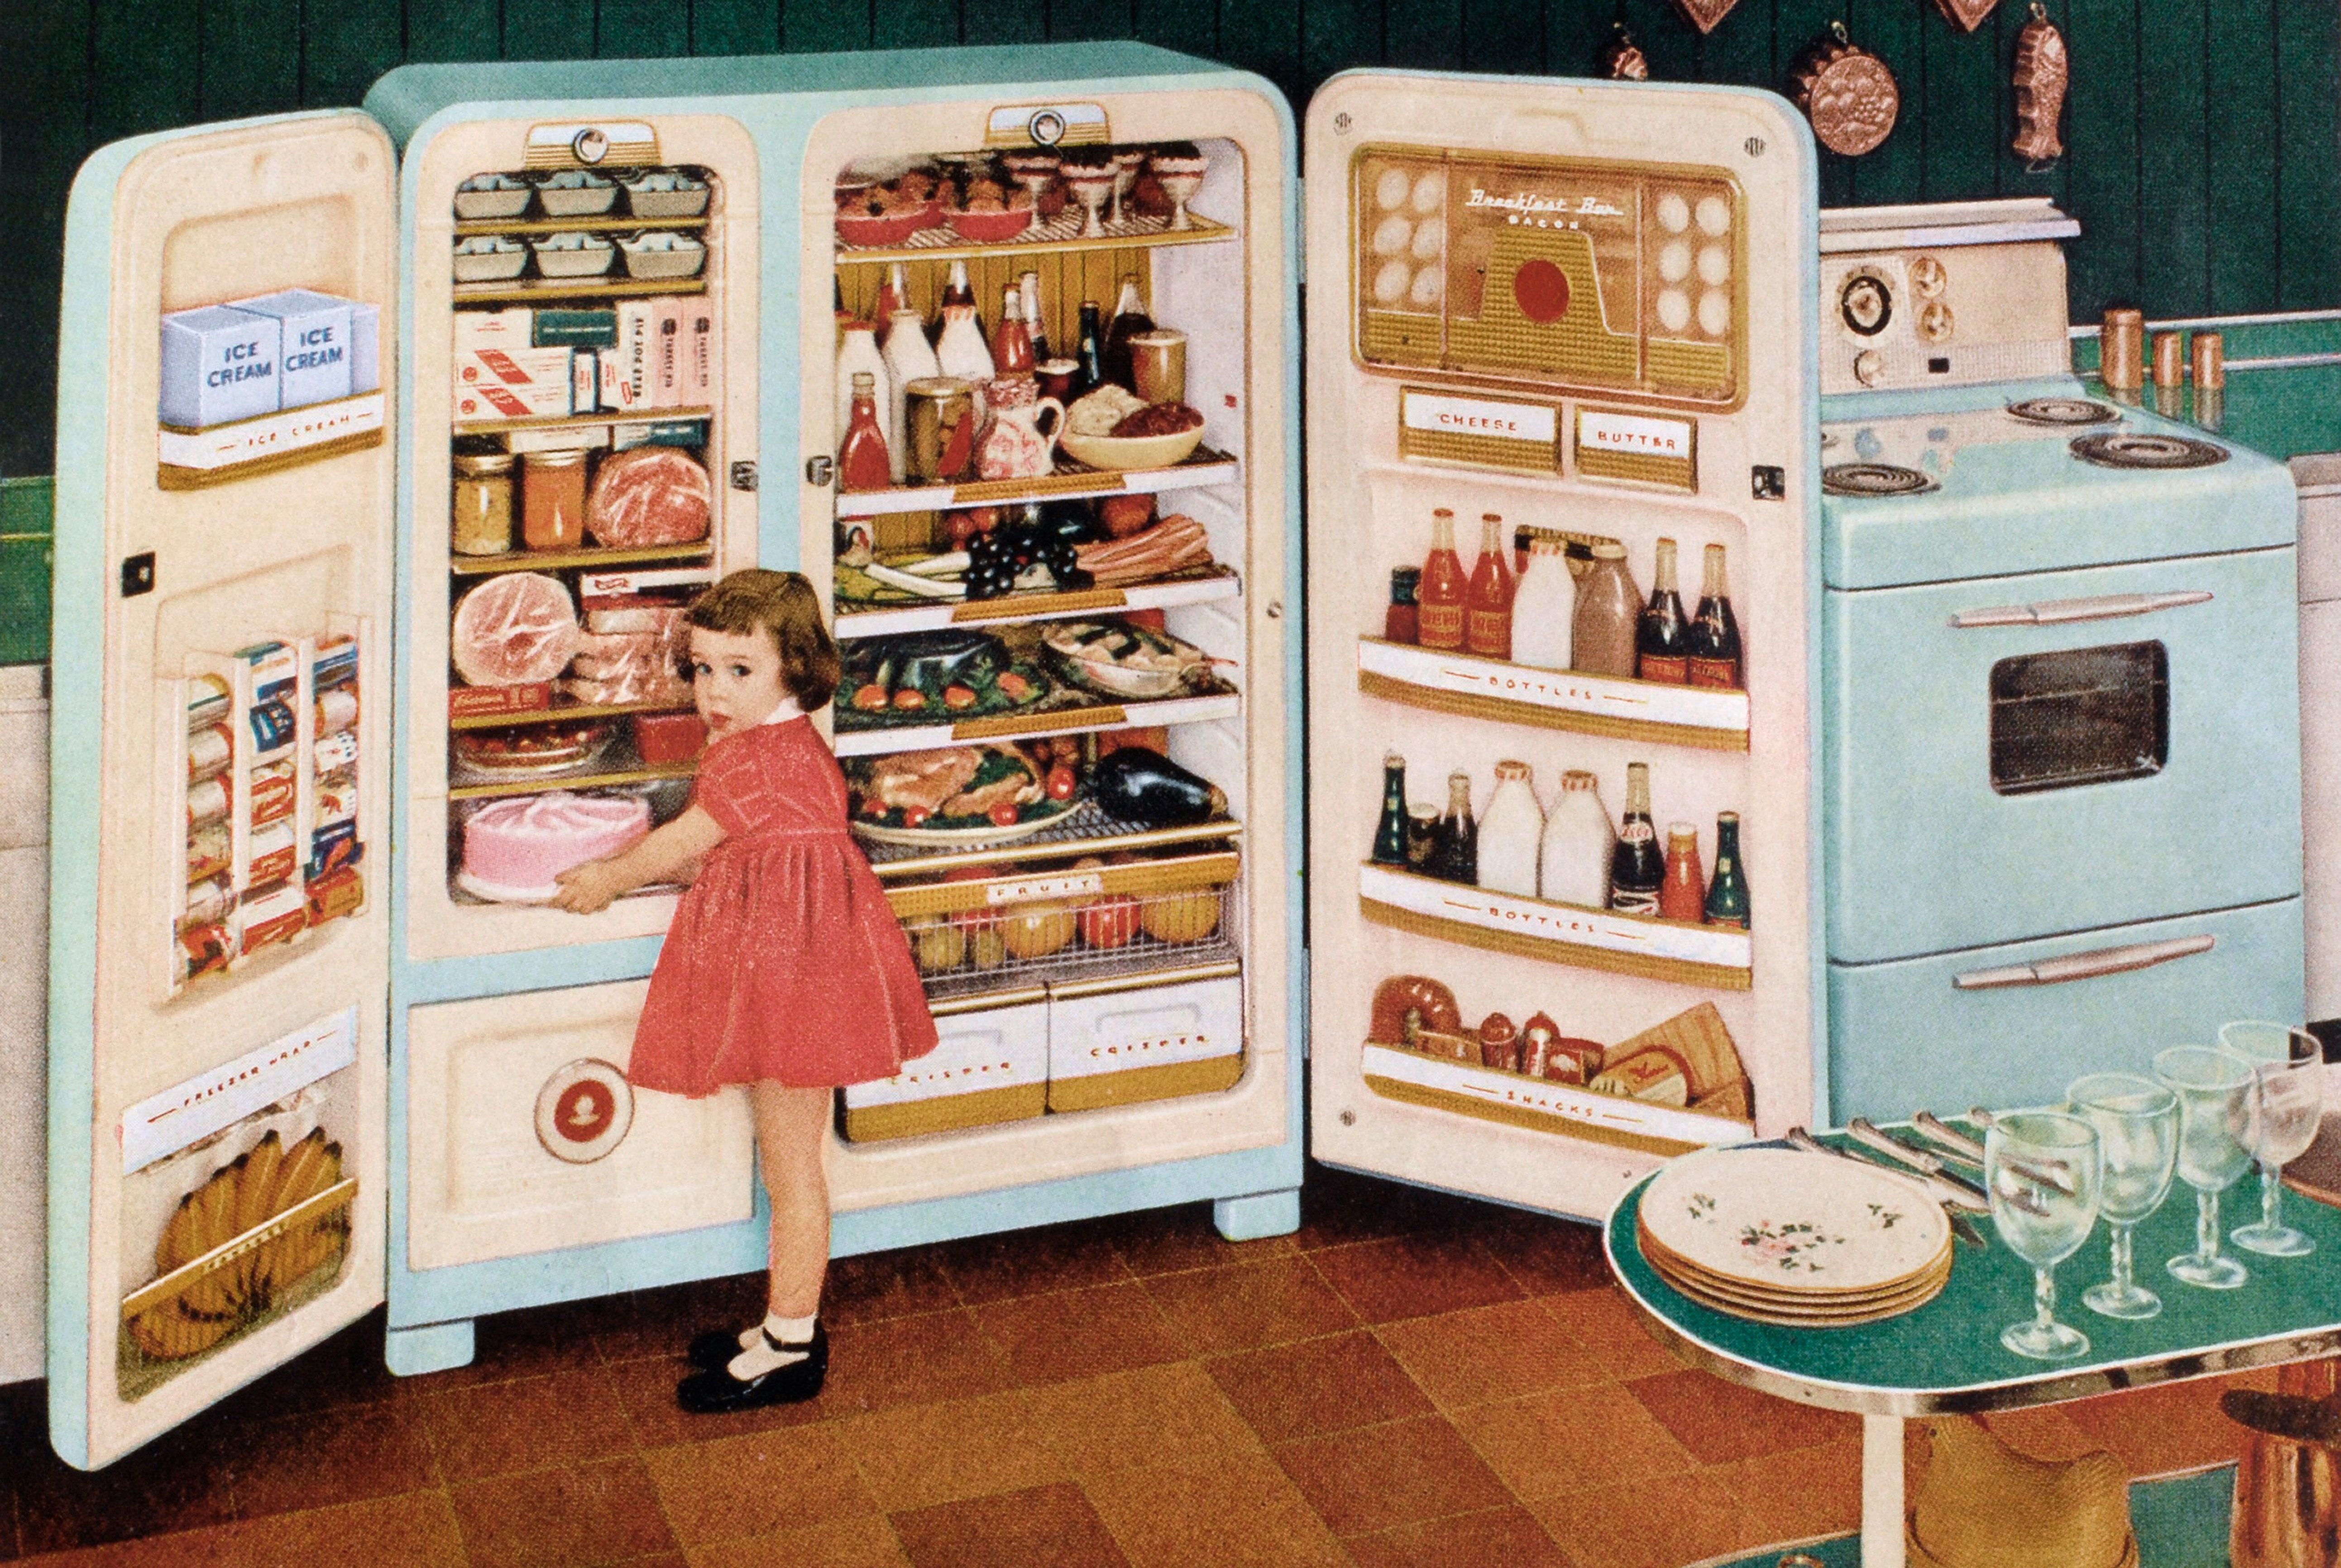 The TikTok-Famous Refrigerator Organizer Is Back